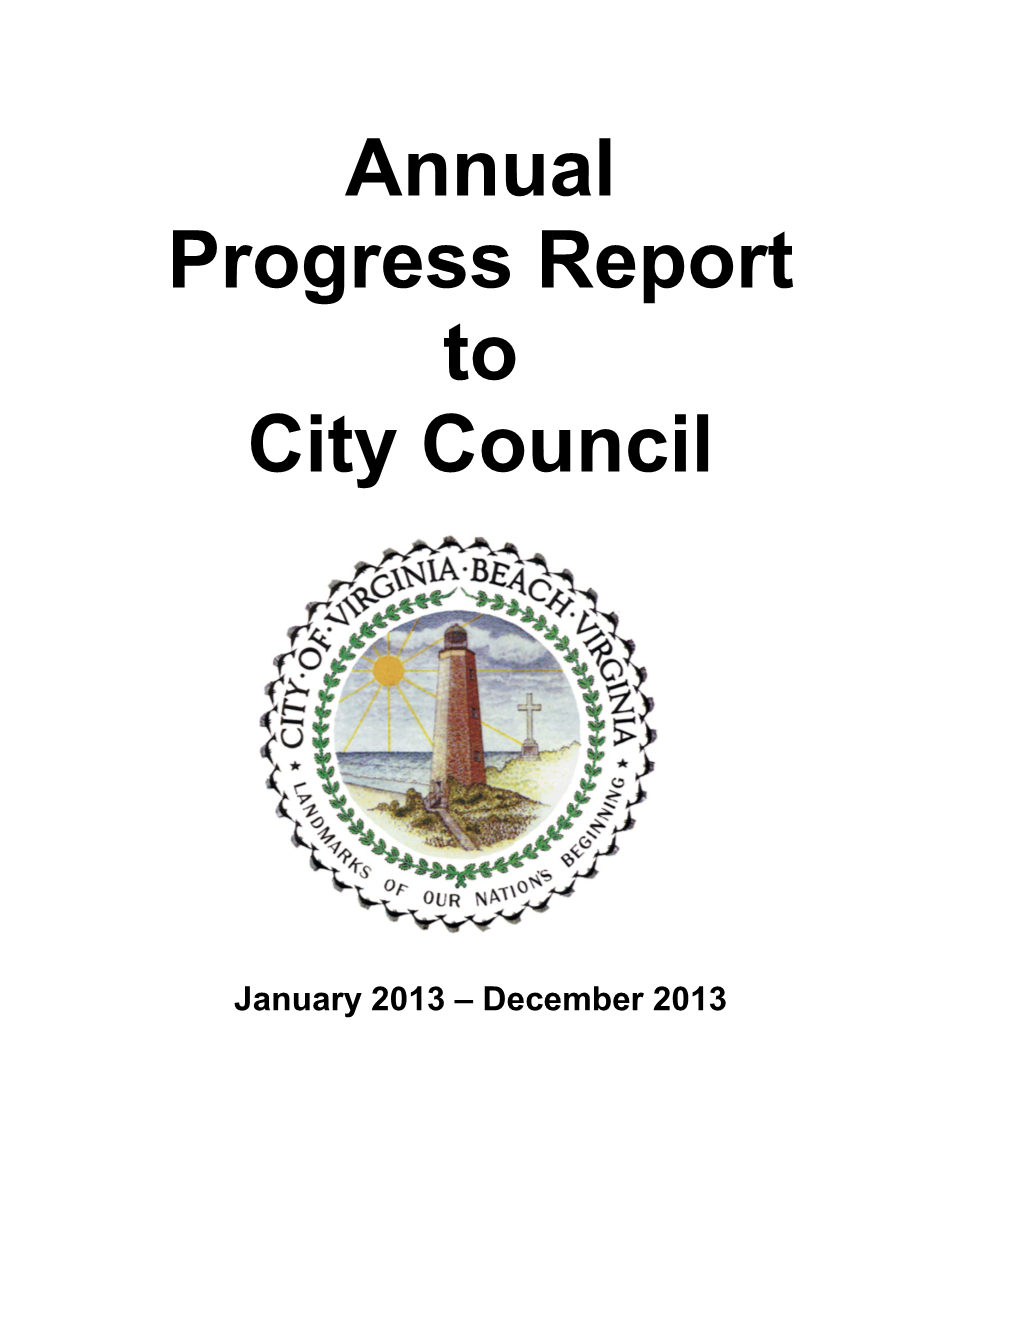 Annual Progress Report to City Council